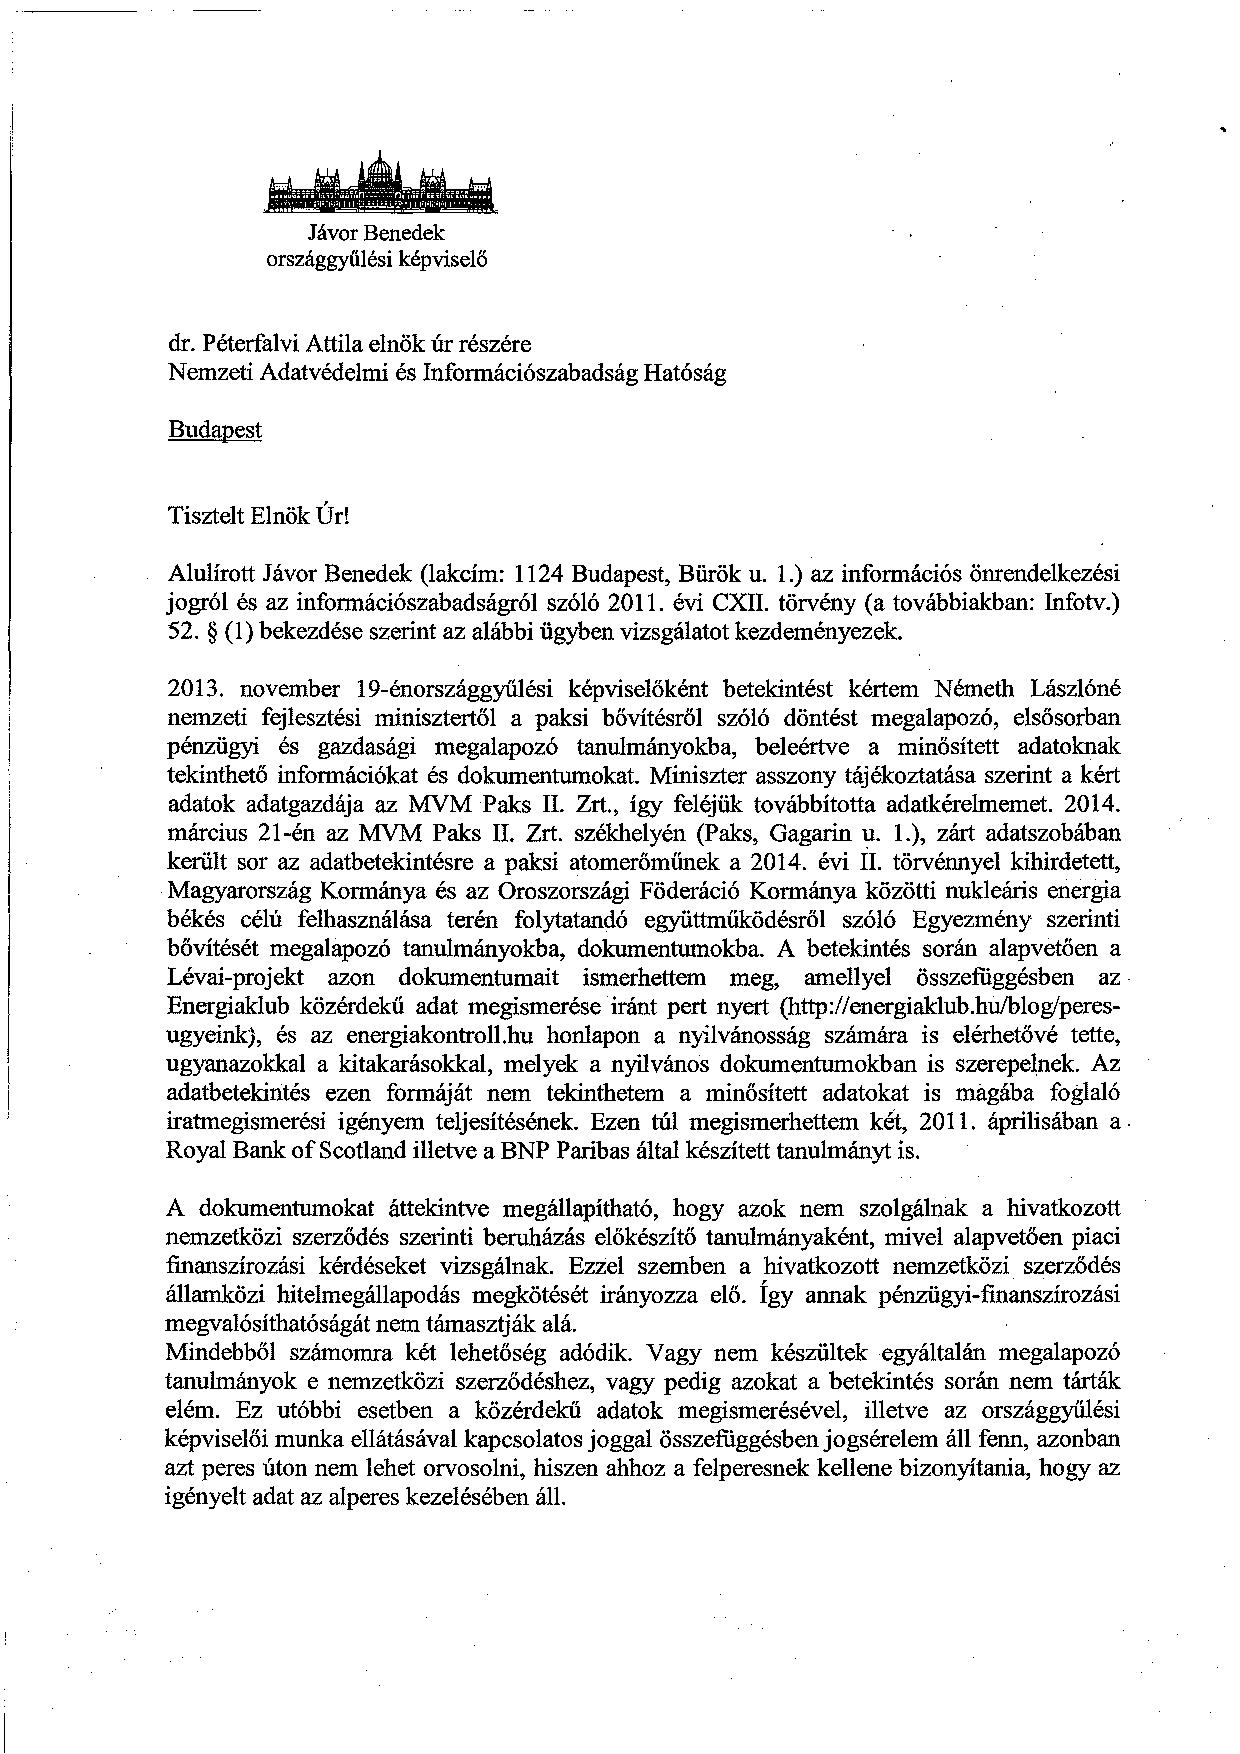 dr.Peterfalvi_A_NAIH_2013.03.27-page-001.jpg